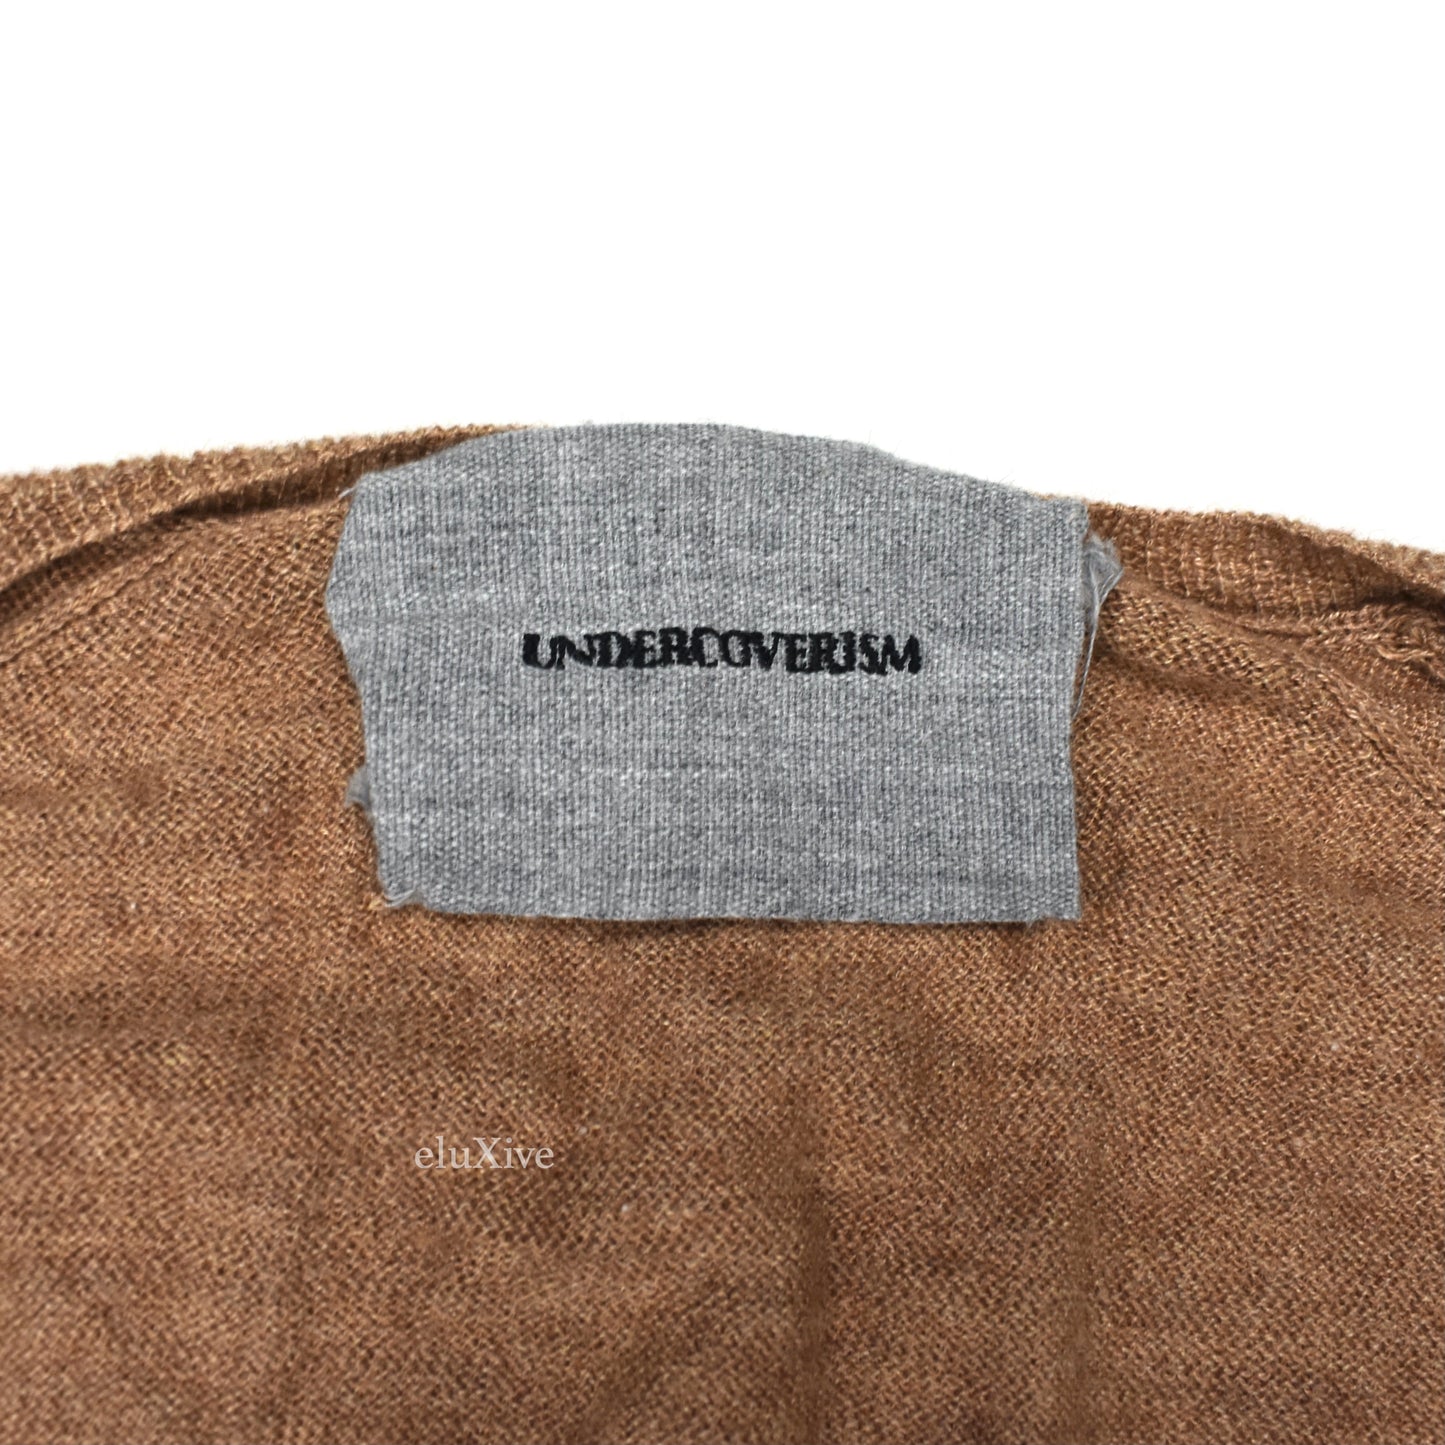 Undercover - AW11 'Mirror' Tan Silk / Cashmere V-Neck Sweater